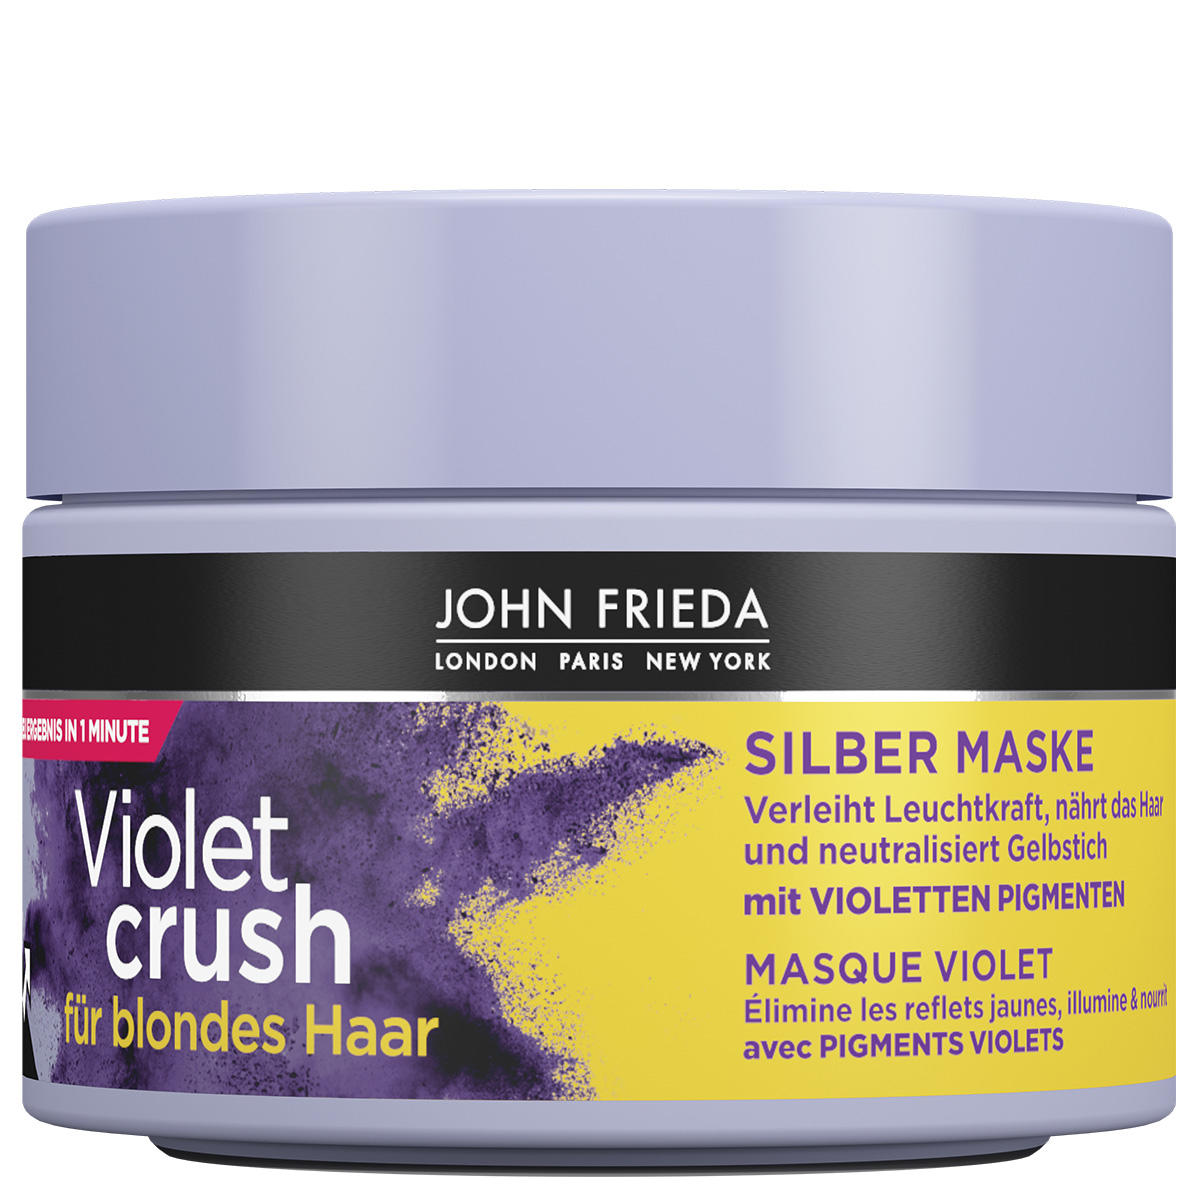 JOHN FRIEDA Violet Crush Silver mask 250 ml - 1